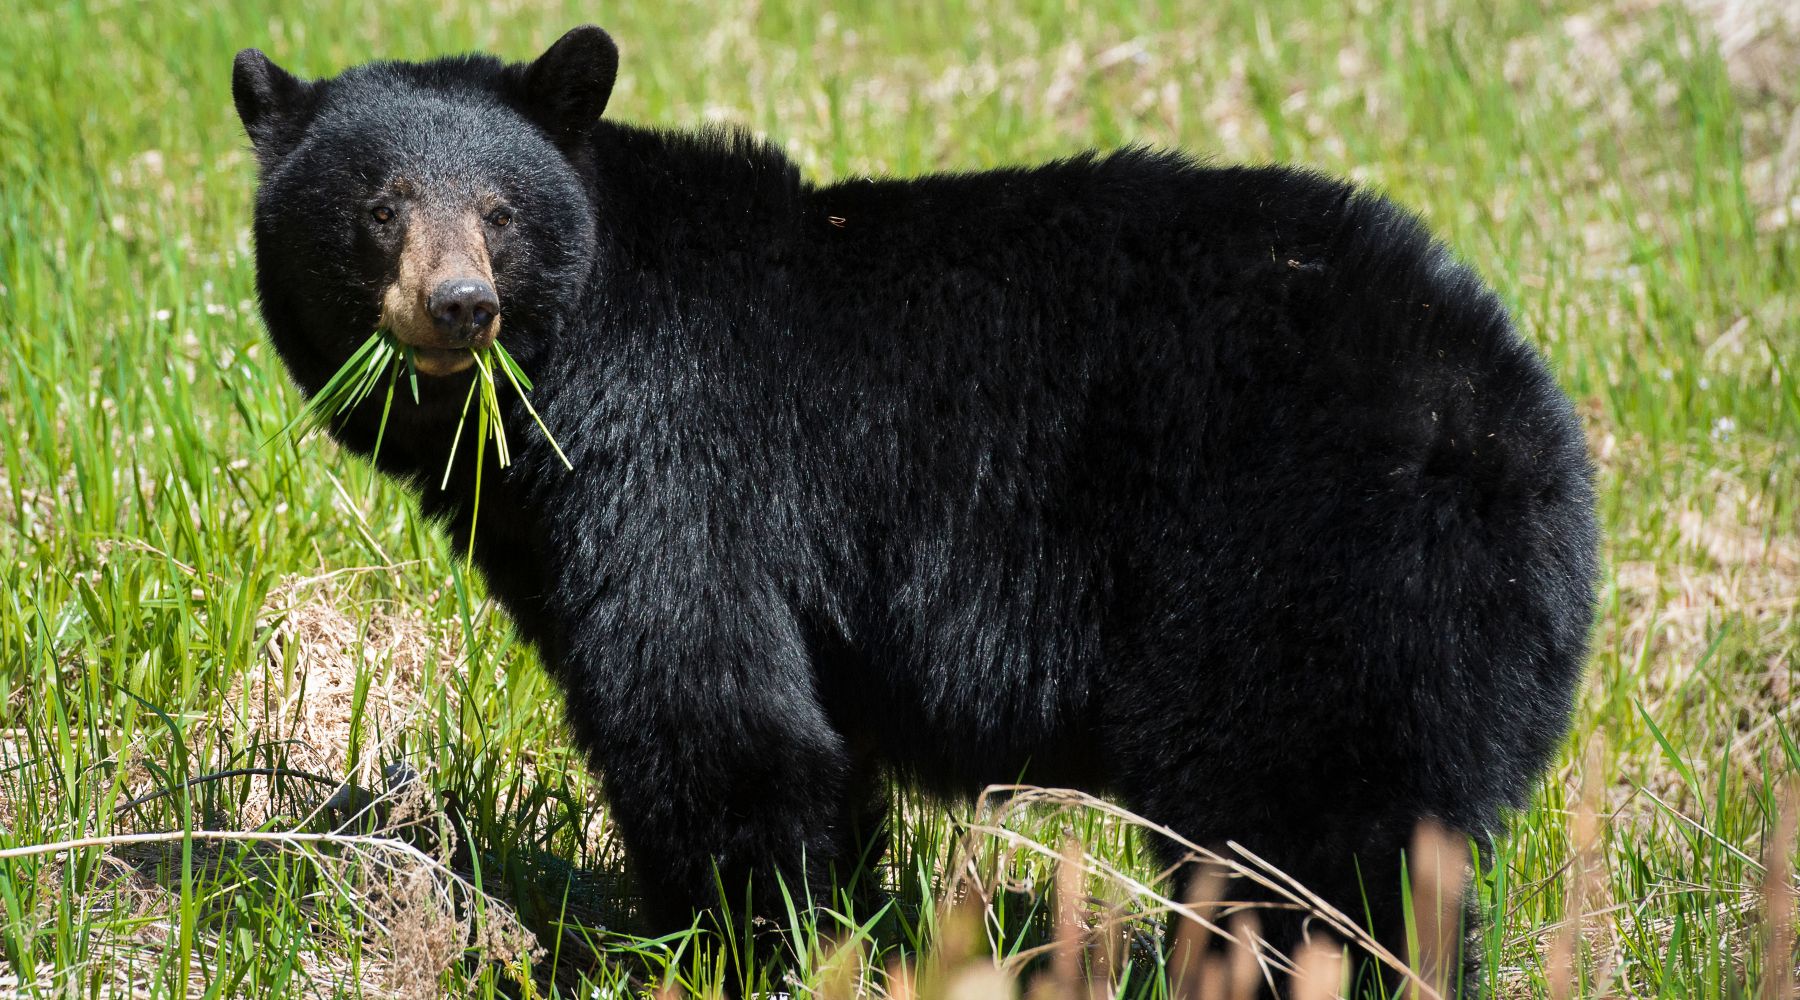 Black bear eating grass